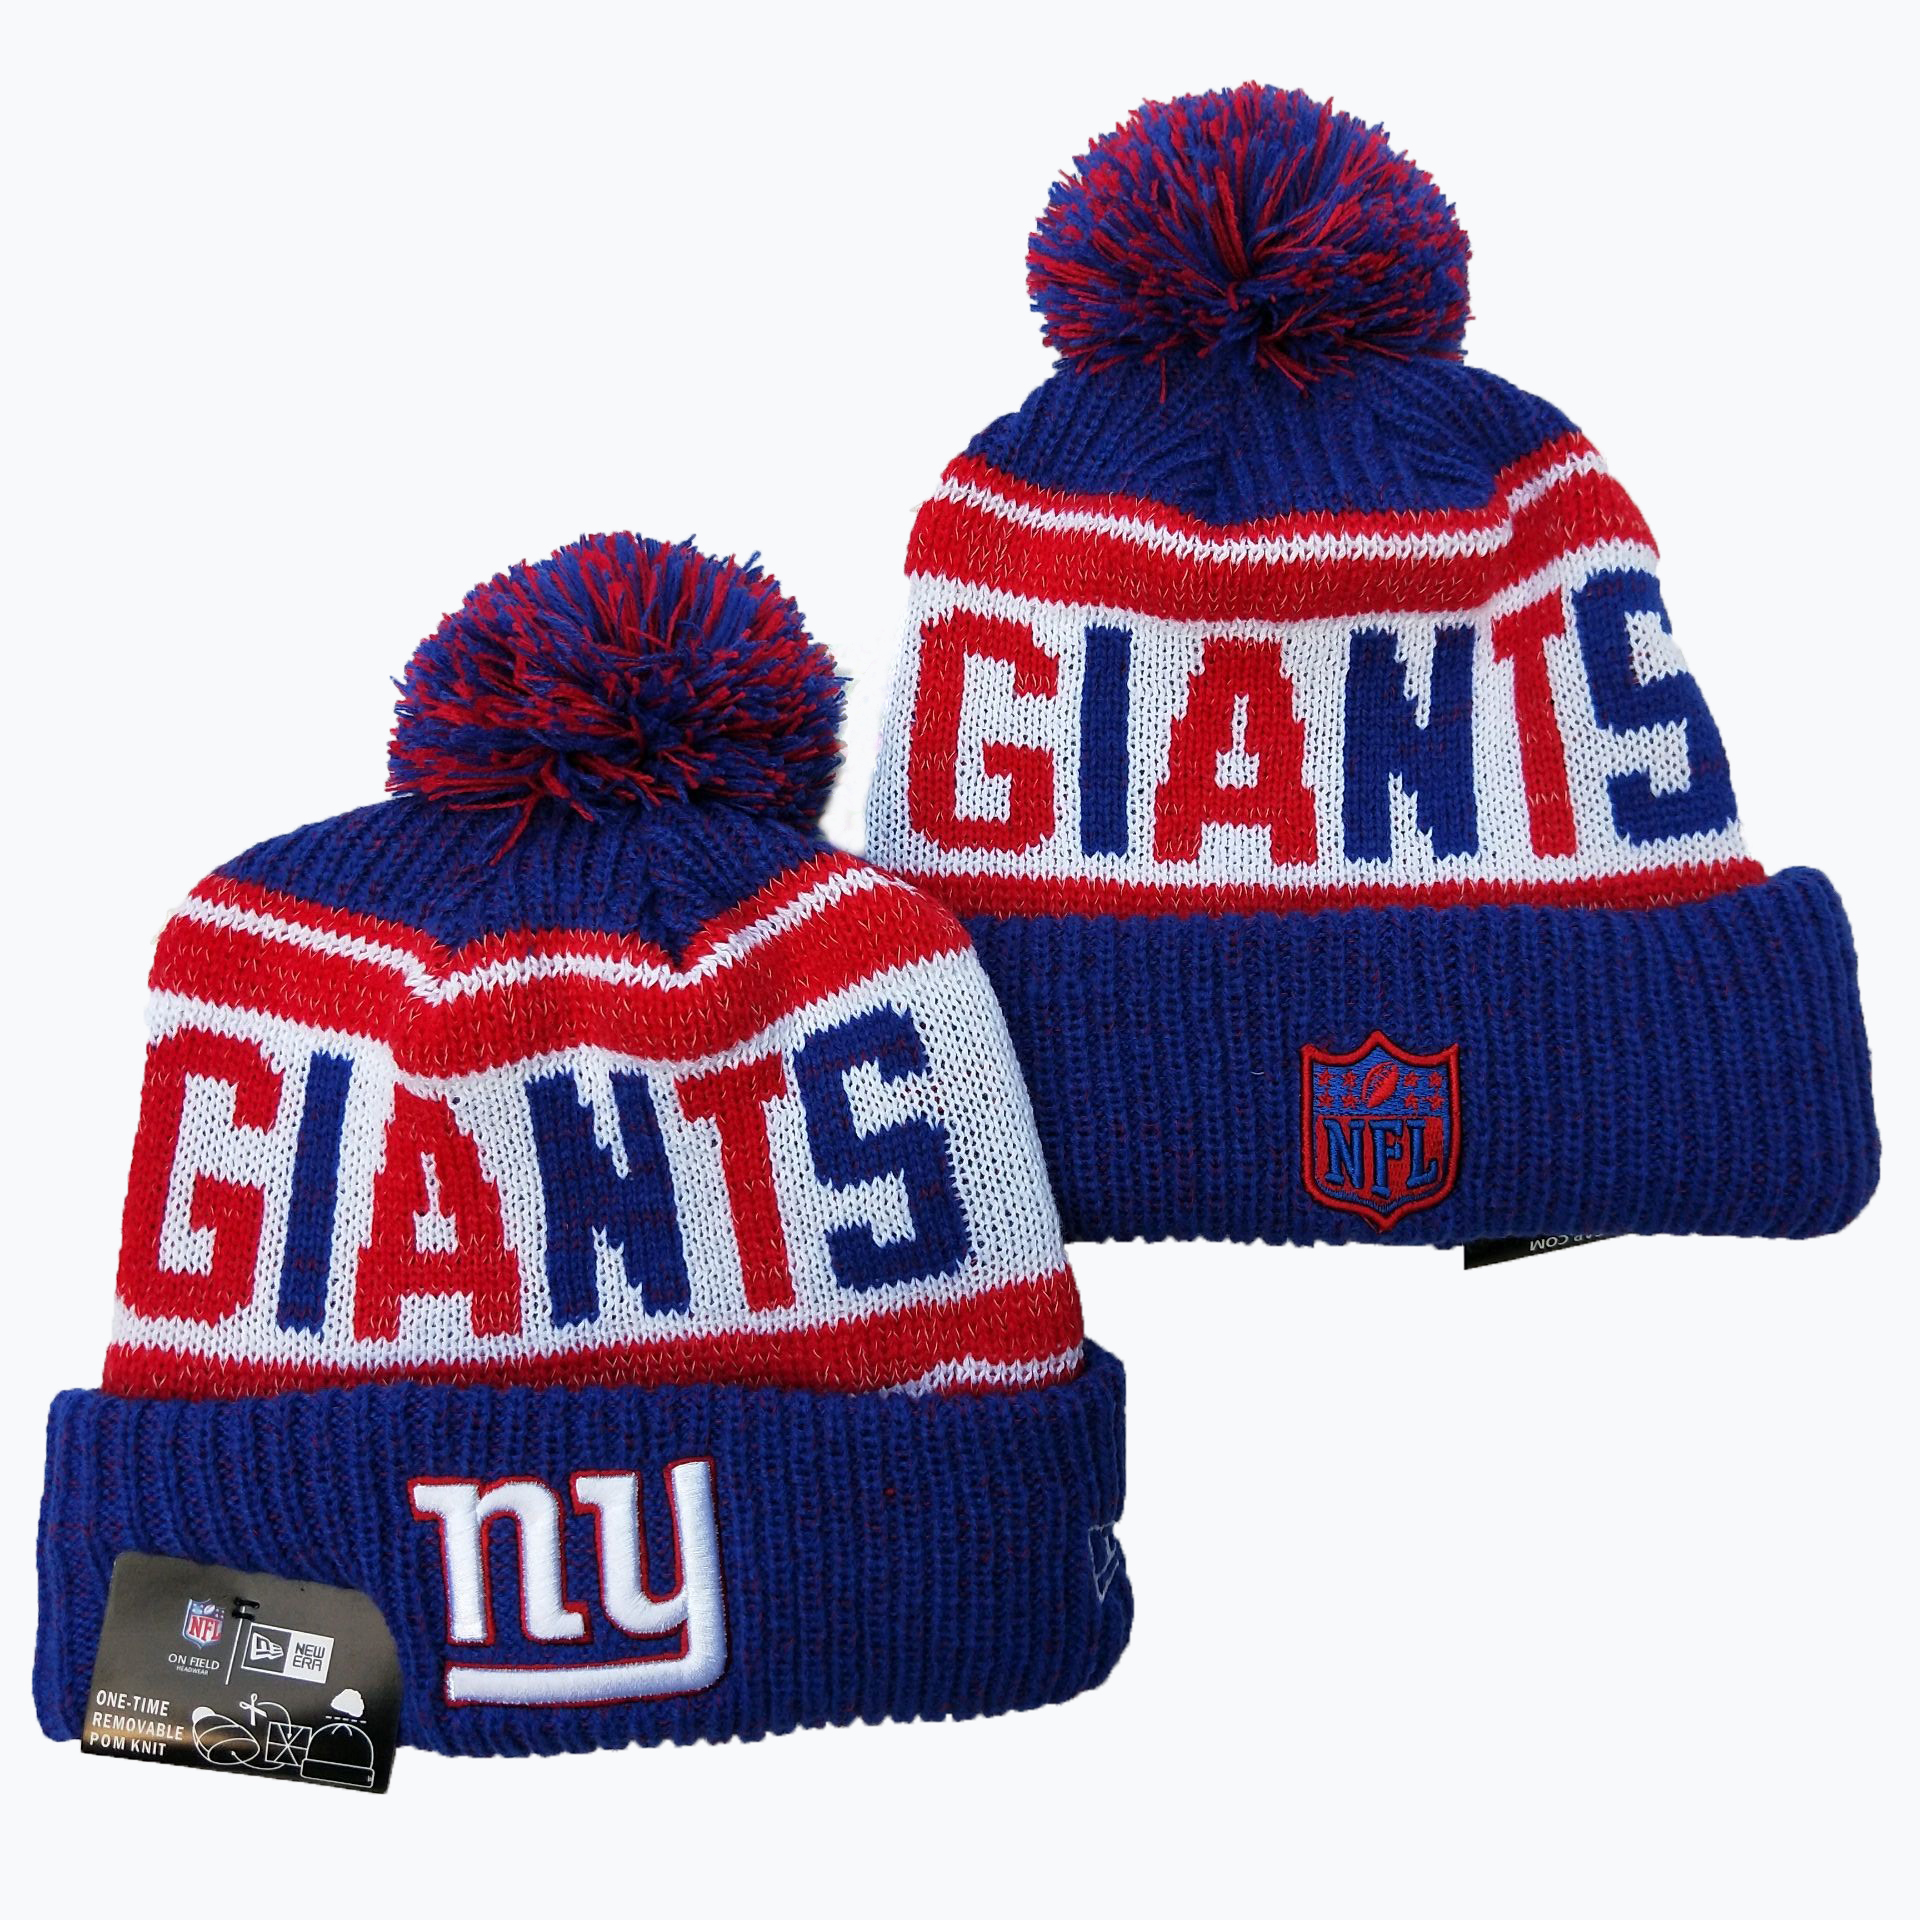 New York Giants Knit Hats 046